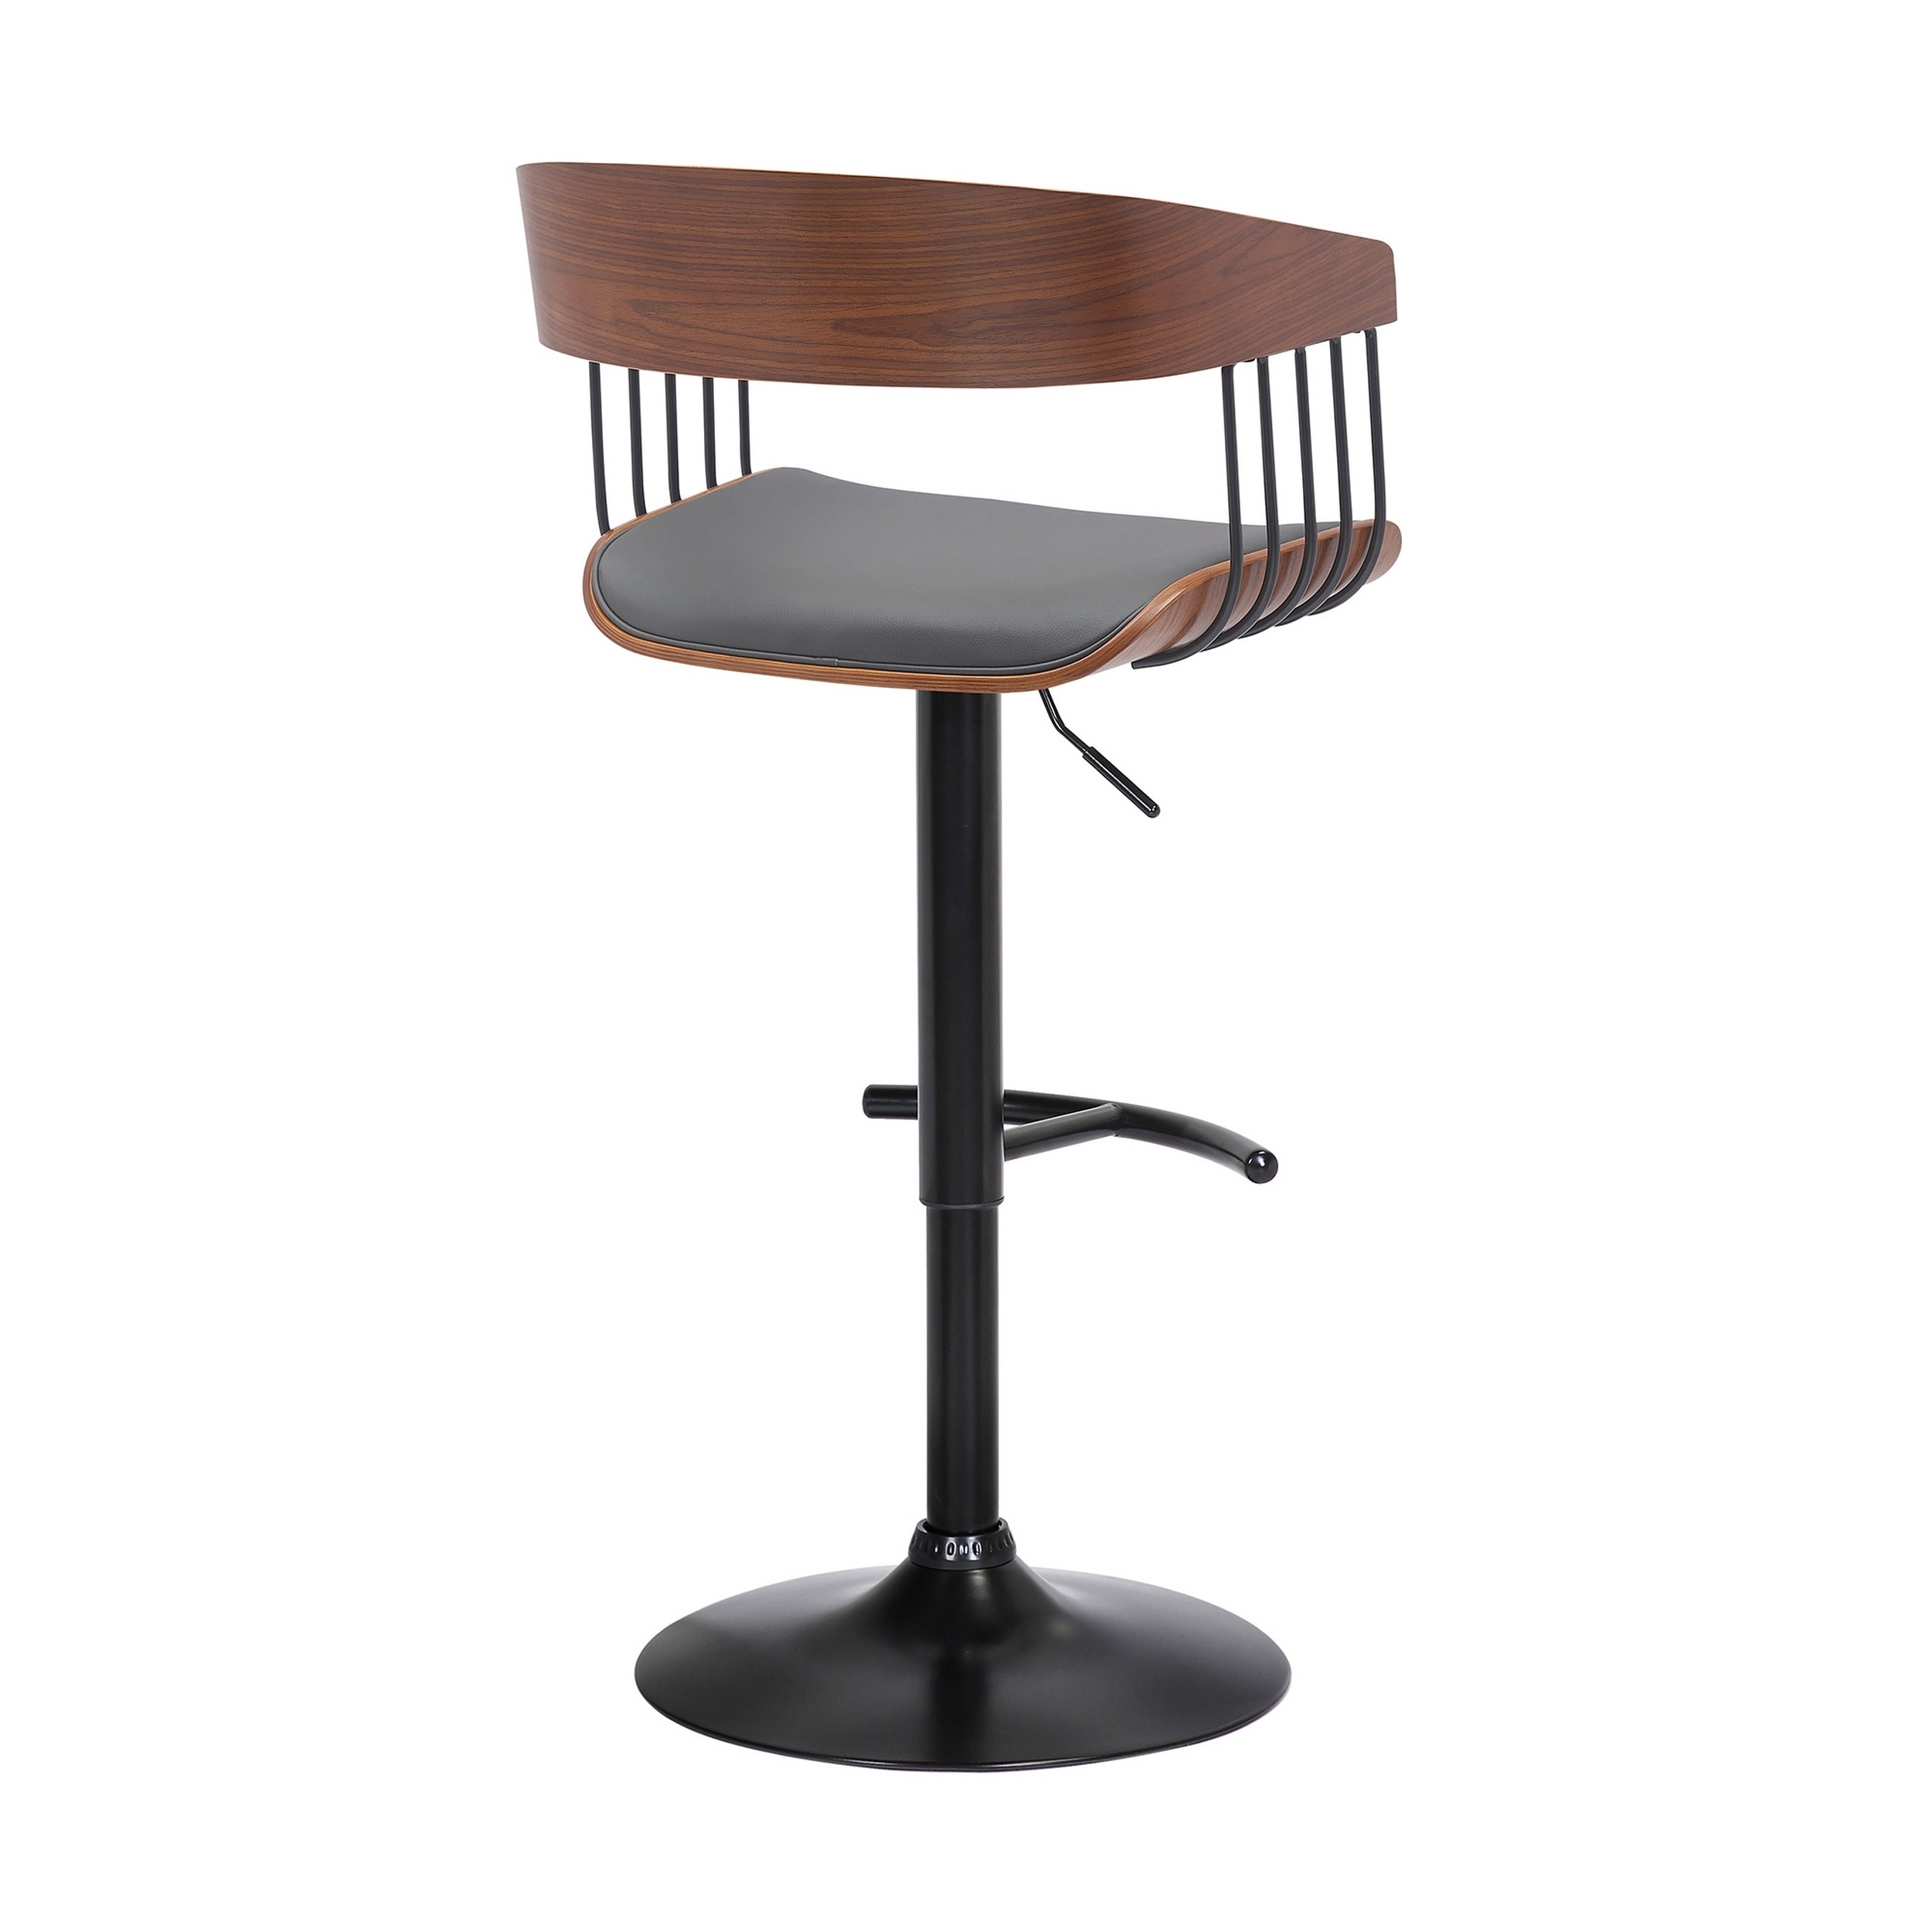 Lizo Walnut Barstool Chair, 24-33 Inch Adjustable Height, Curved Seat, Gray - Saltoro Sherpi